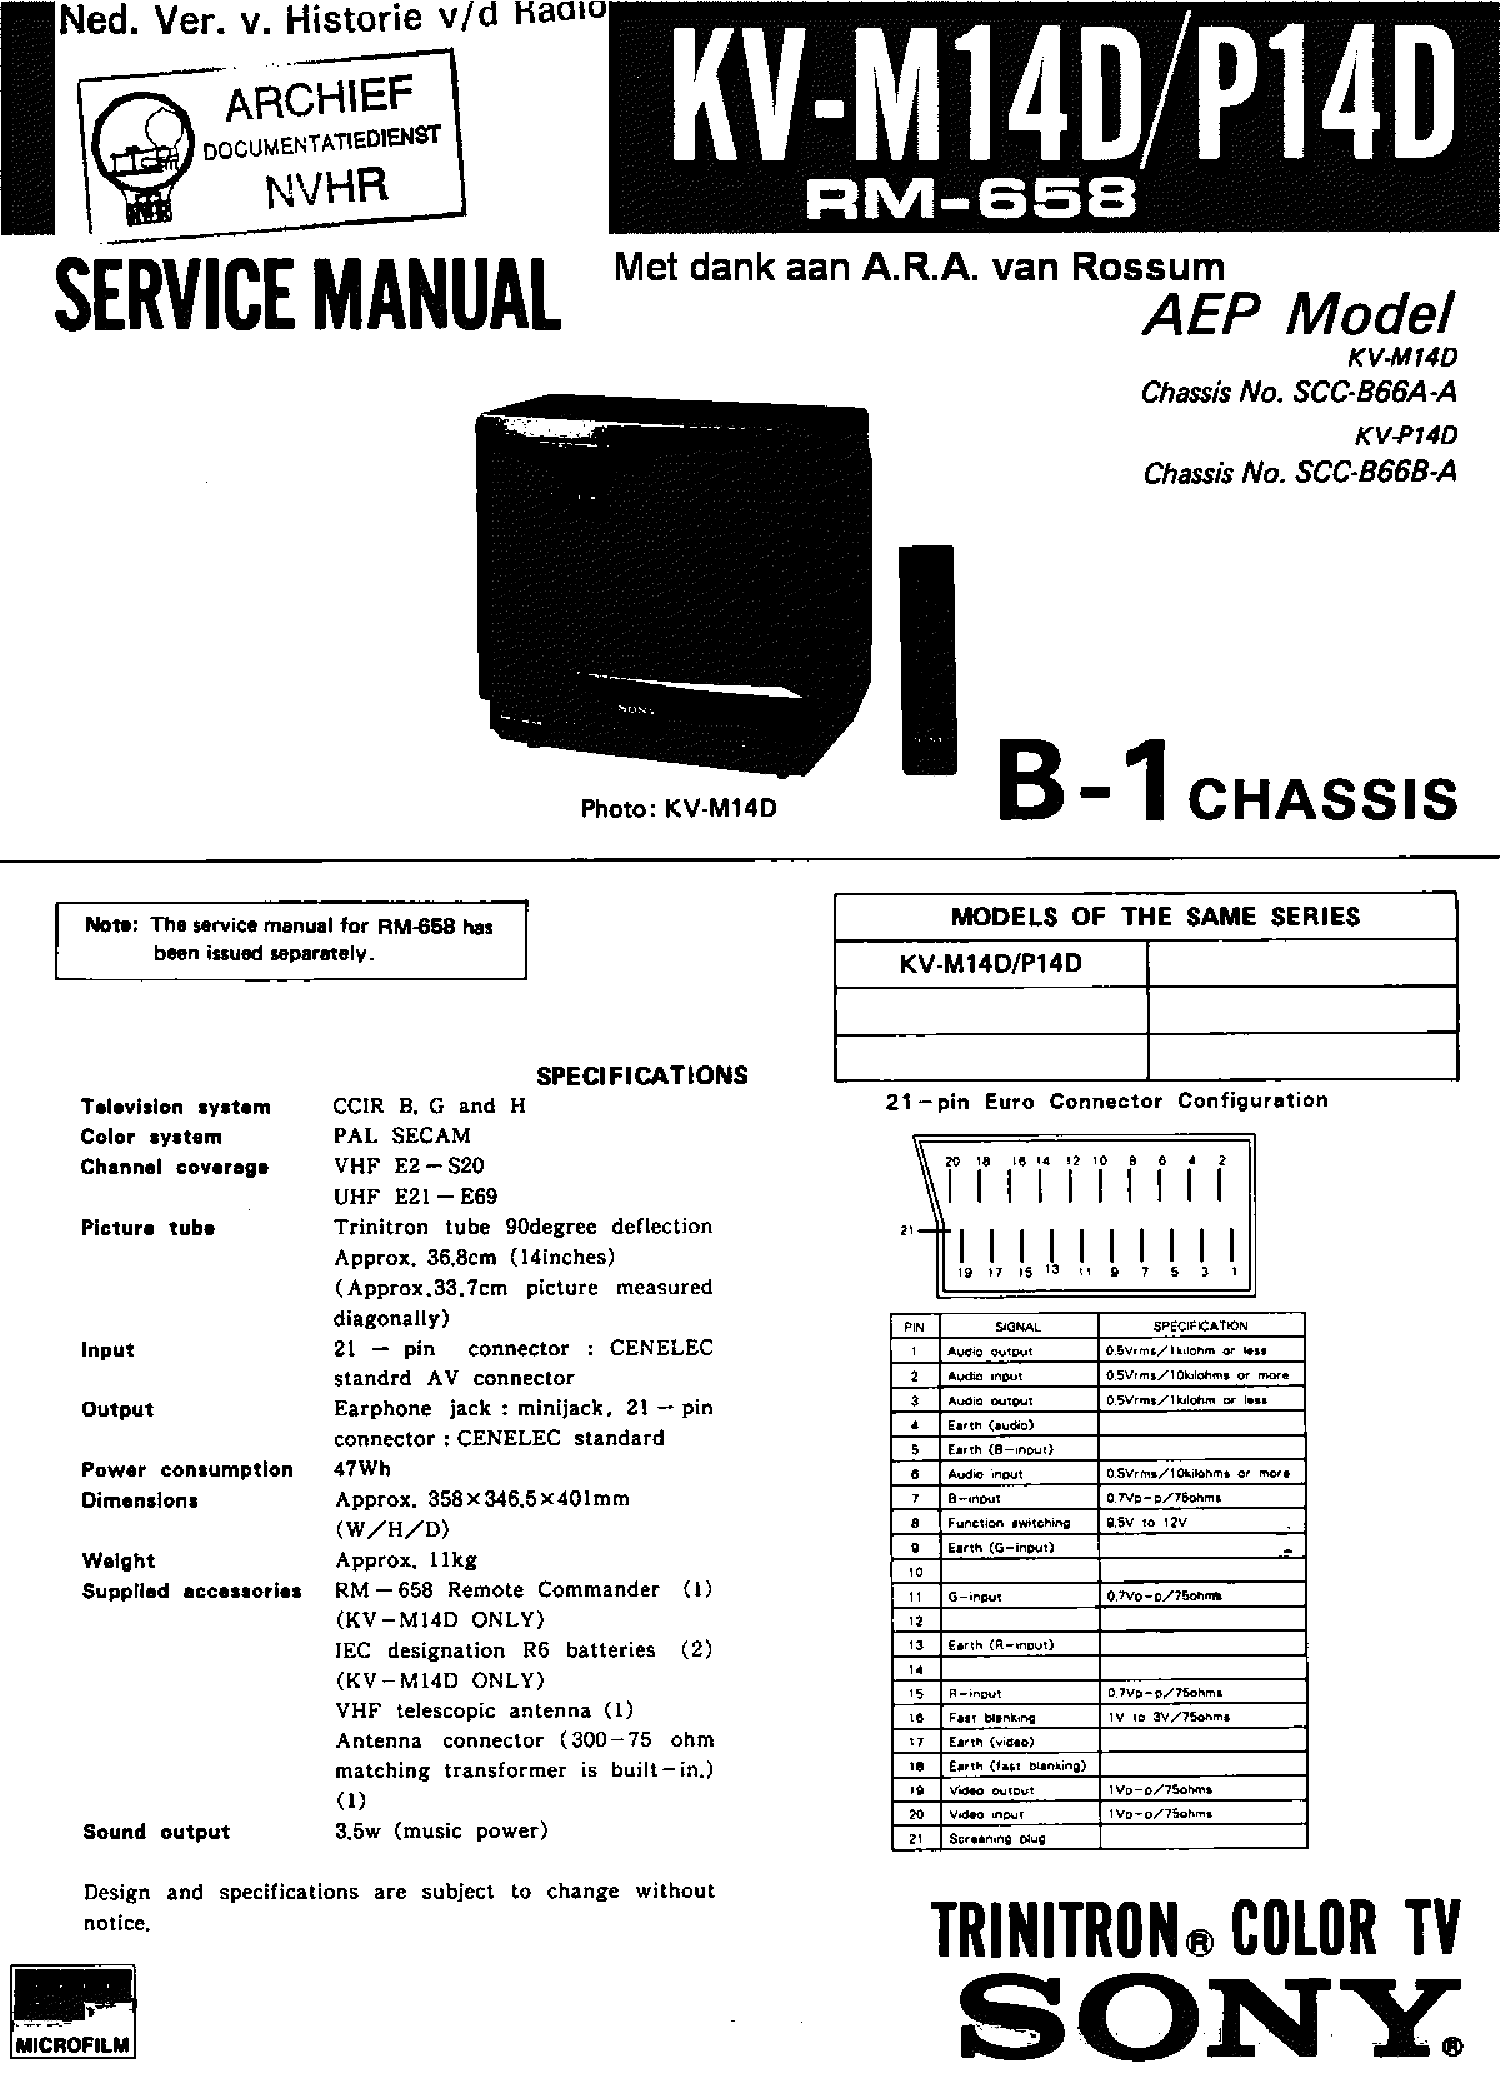 SONY KV-M14D-P14D RM-659 B-1 CHASSIS TRINITRON COLOR TV 1988 SM service manual (1st page)